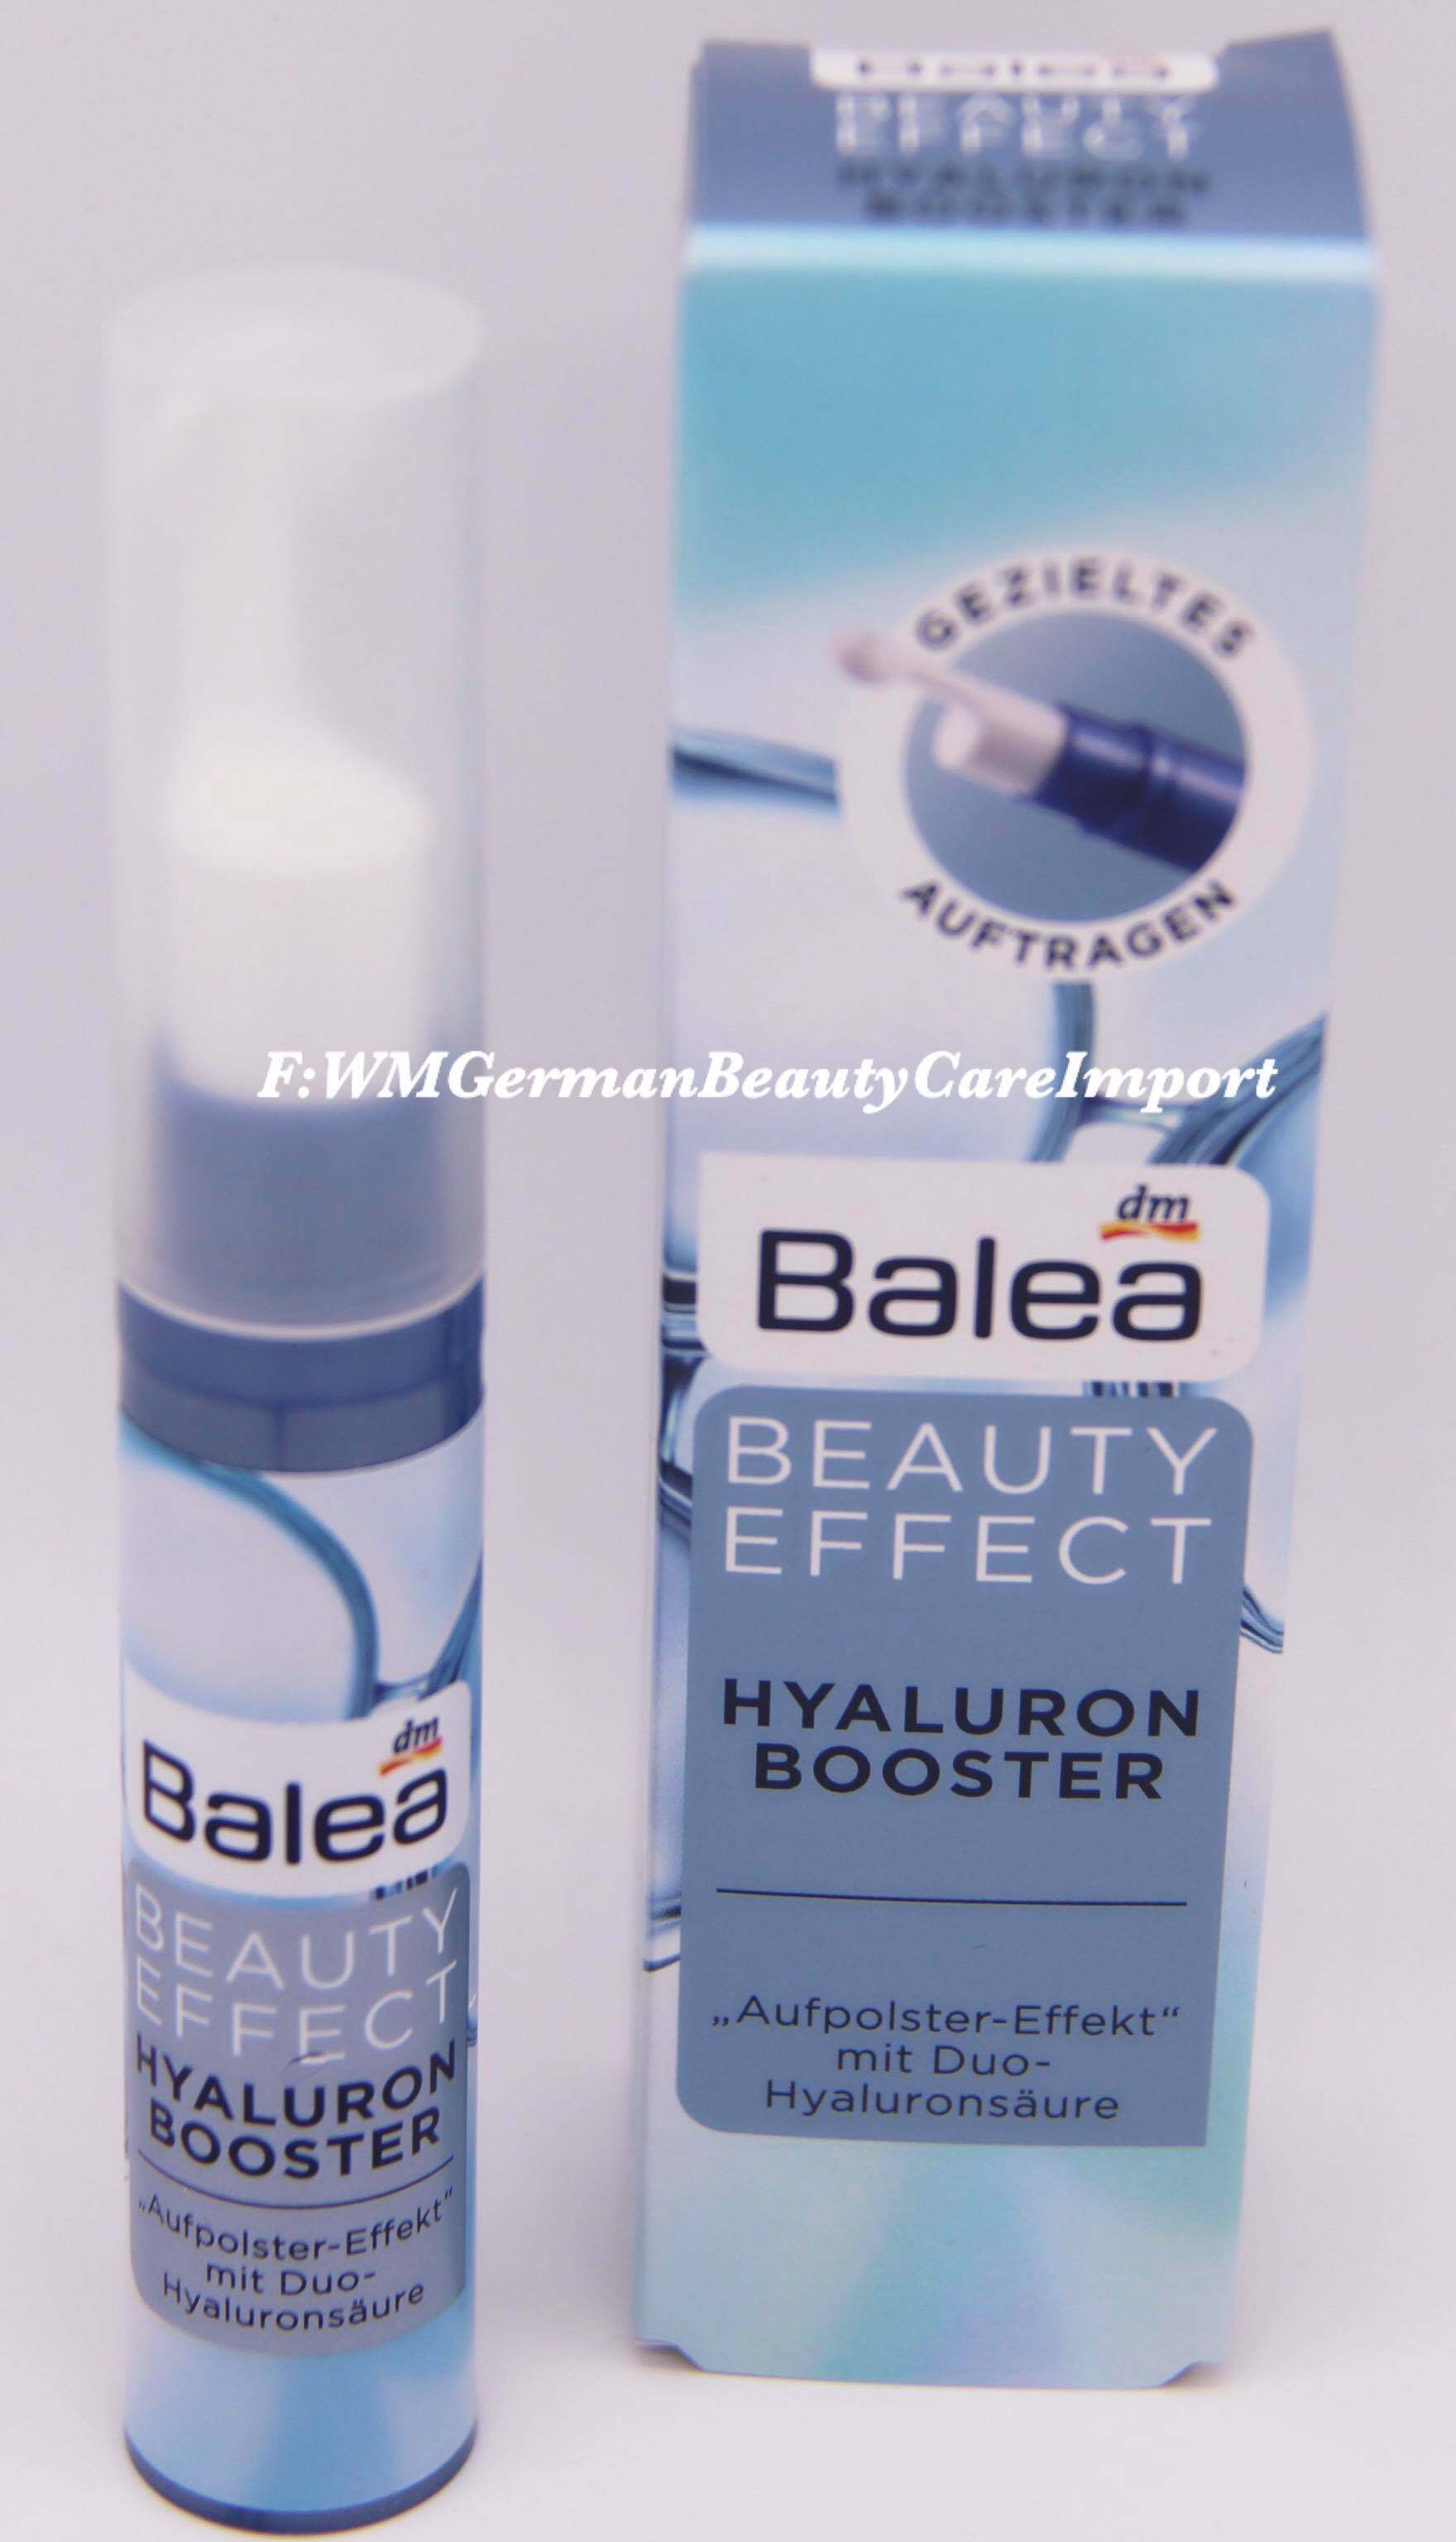 Exp.2022 เซรั่มไฮยาลูรอน บูสเตอร์ 3 เท่า ลดเลือนริ้วรอยเหี่ยวย่น บริเวณหางตา ร่องแก้ม ริมฝีปาก Balea Beauty Effect Hyaluron Booster 10 ml จากเยอรมัน